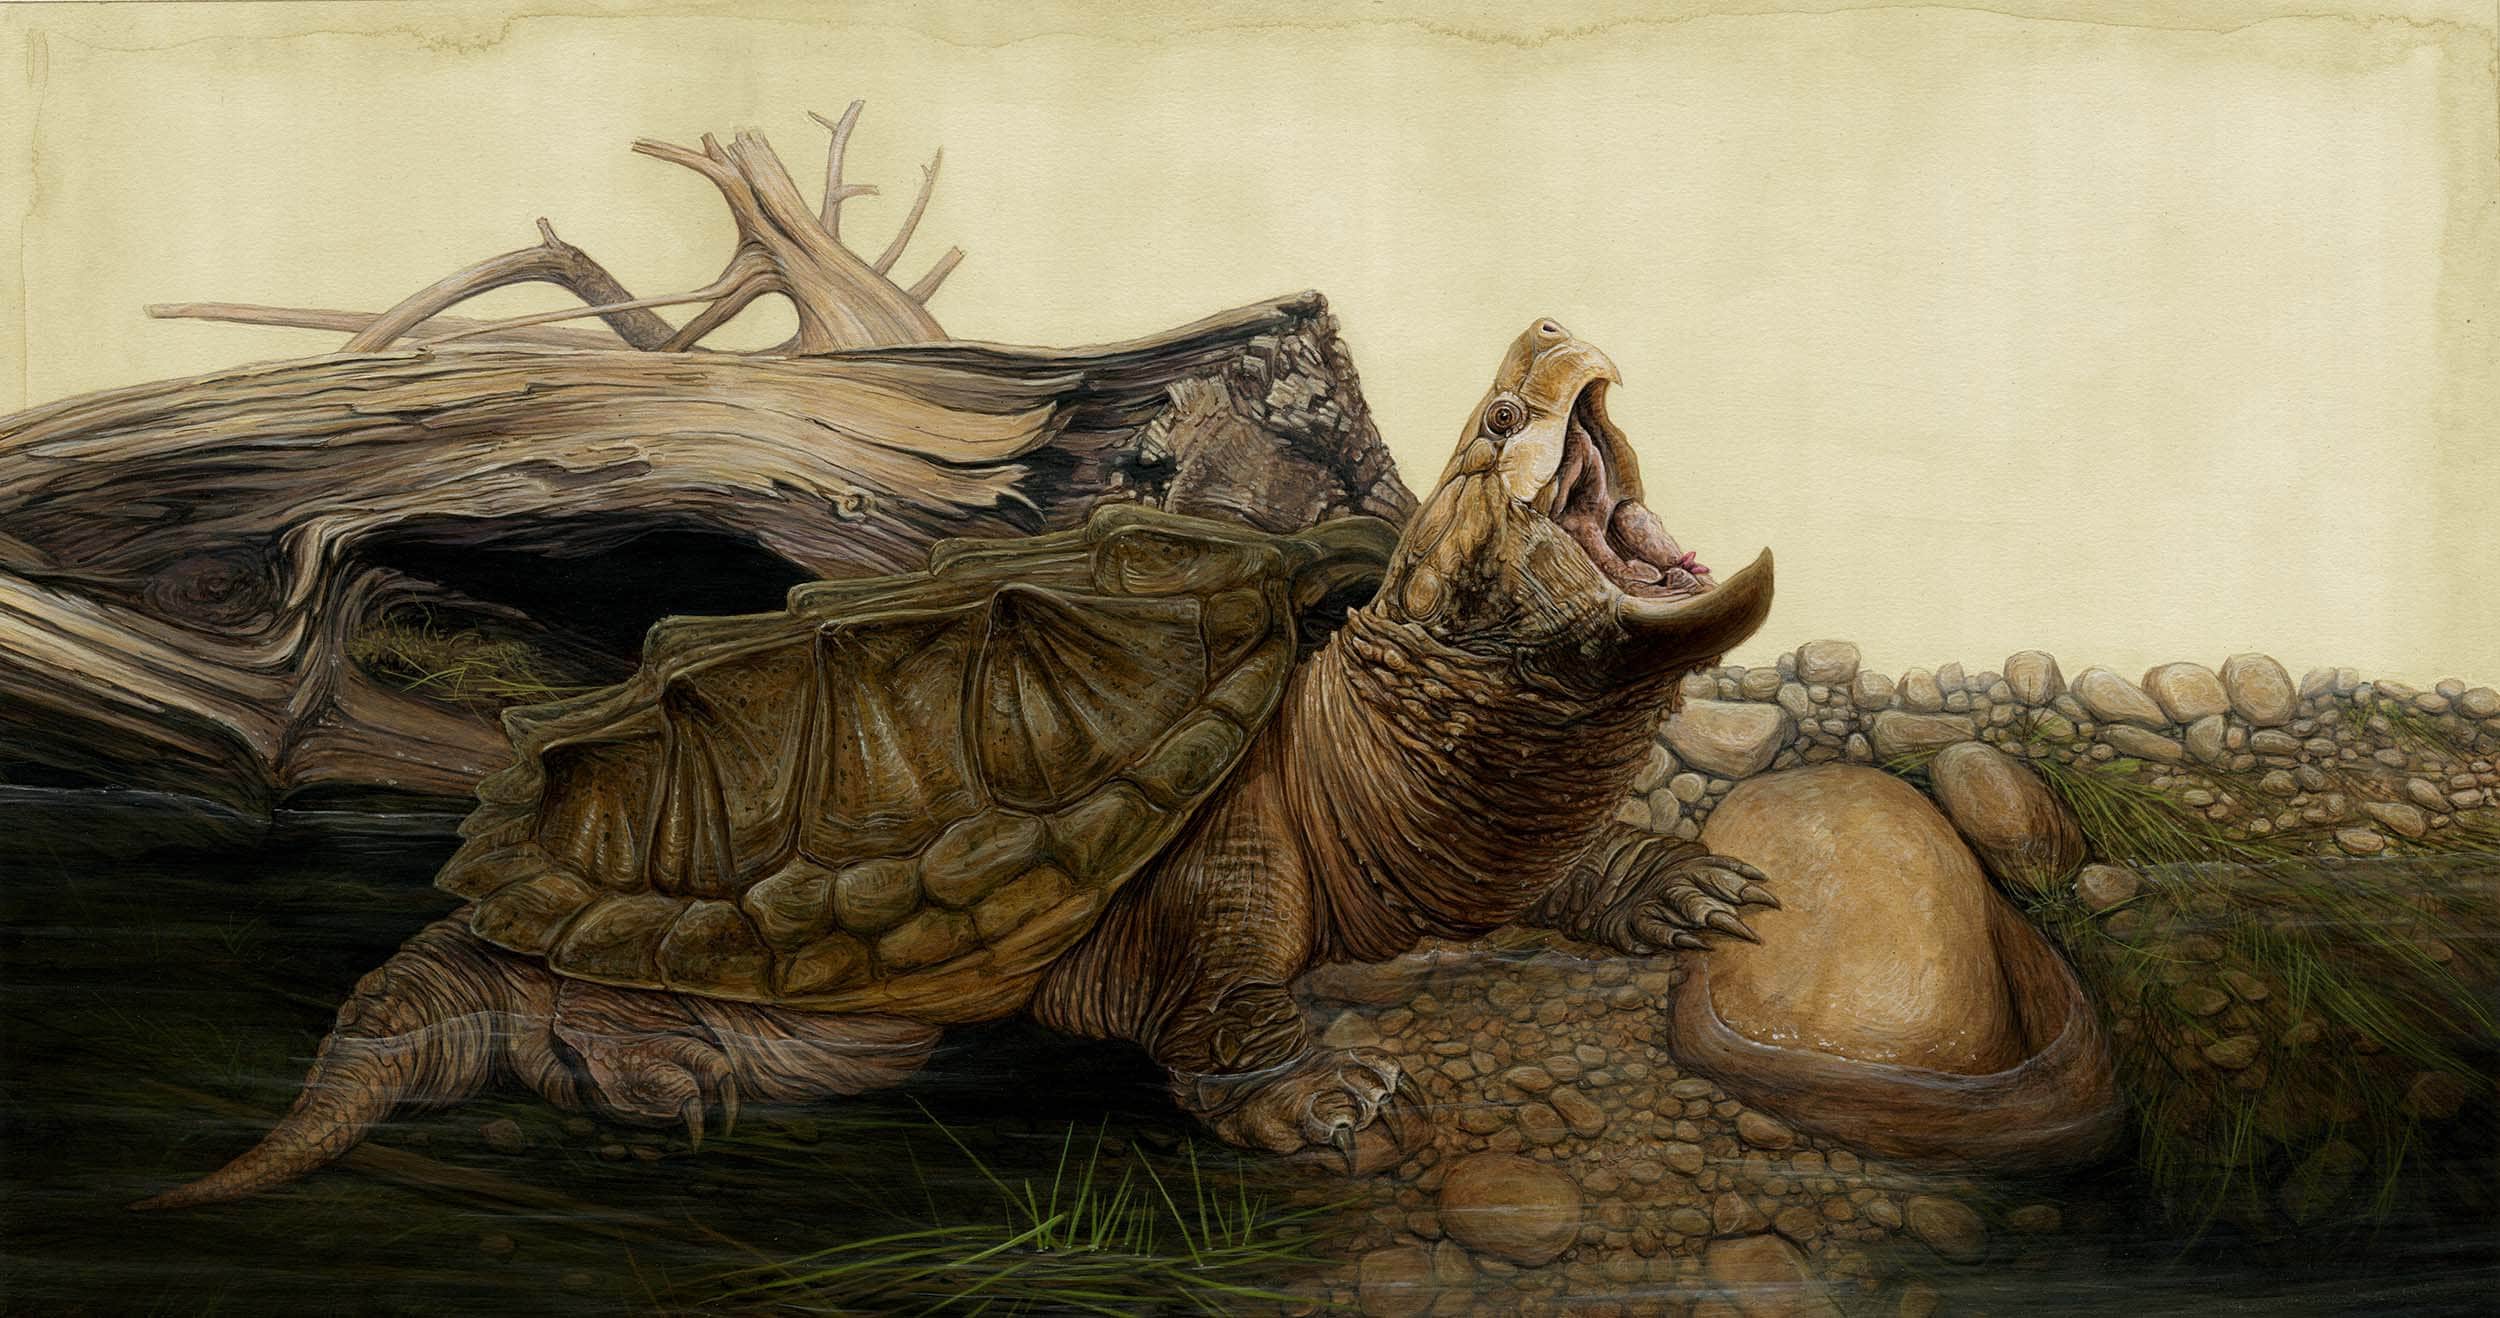 Alligator Snapping Turtle 18.5 X 9.75 Inch Print by Matt - Etsy